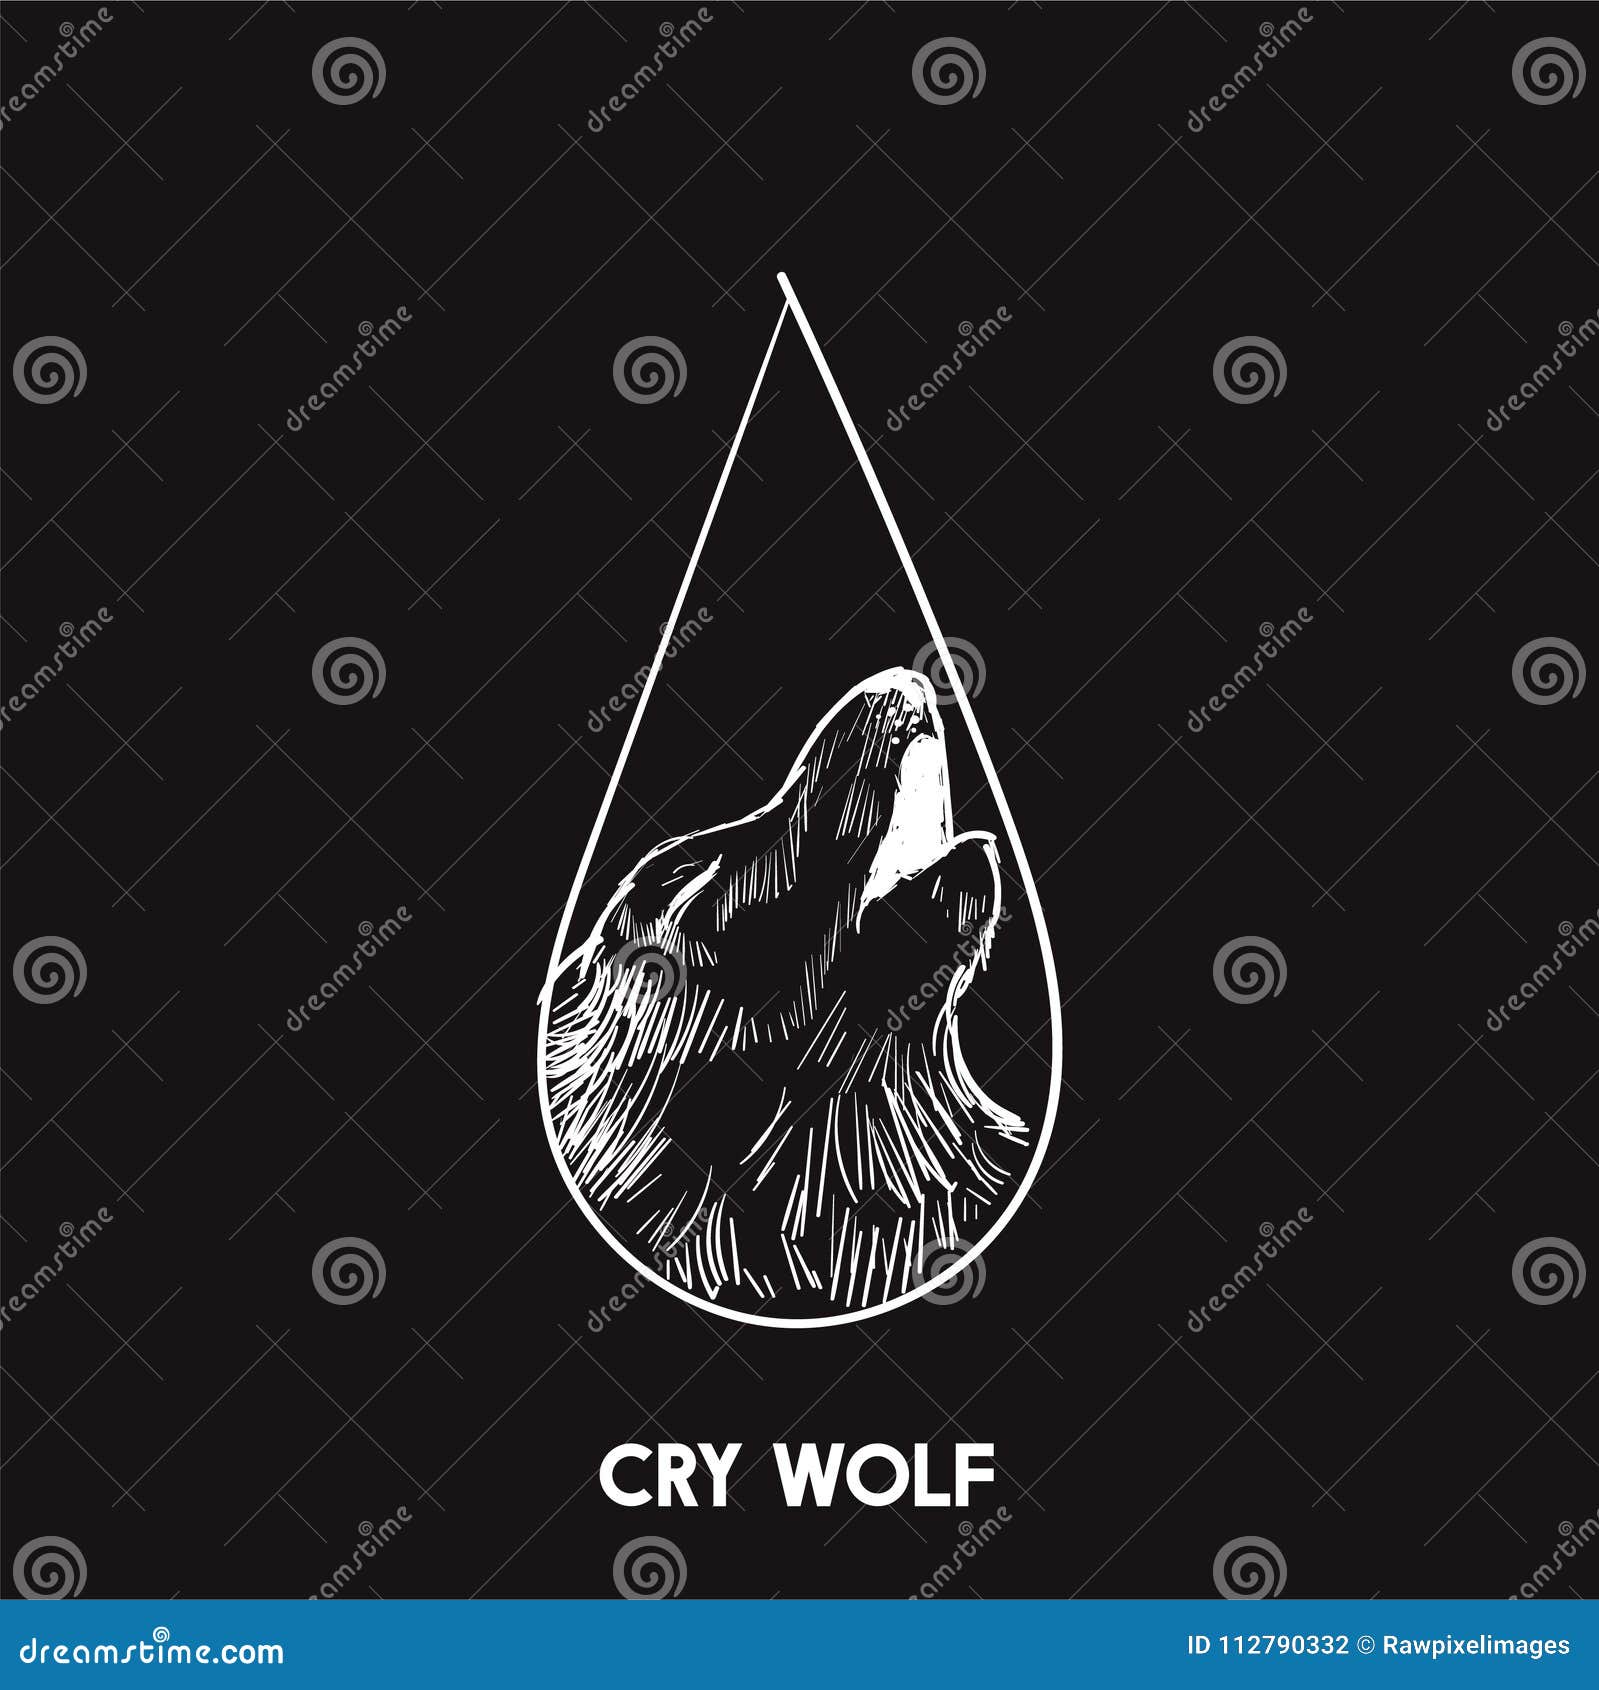  of cry wolf idiom